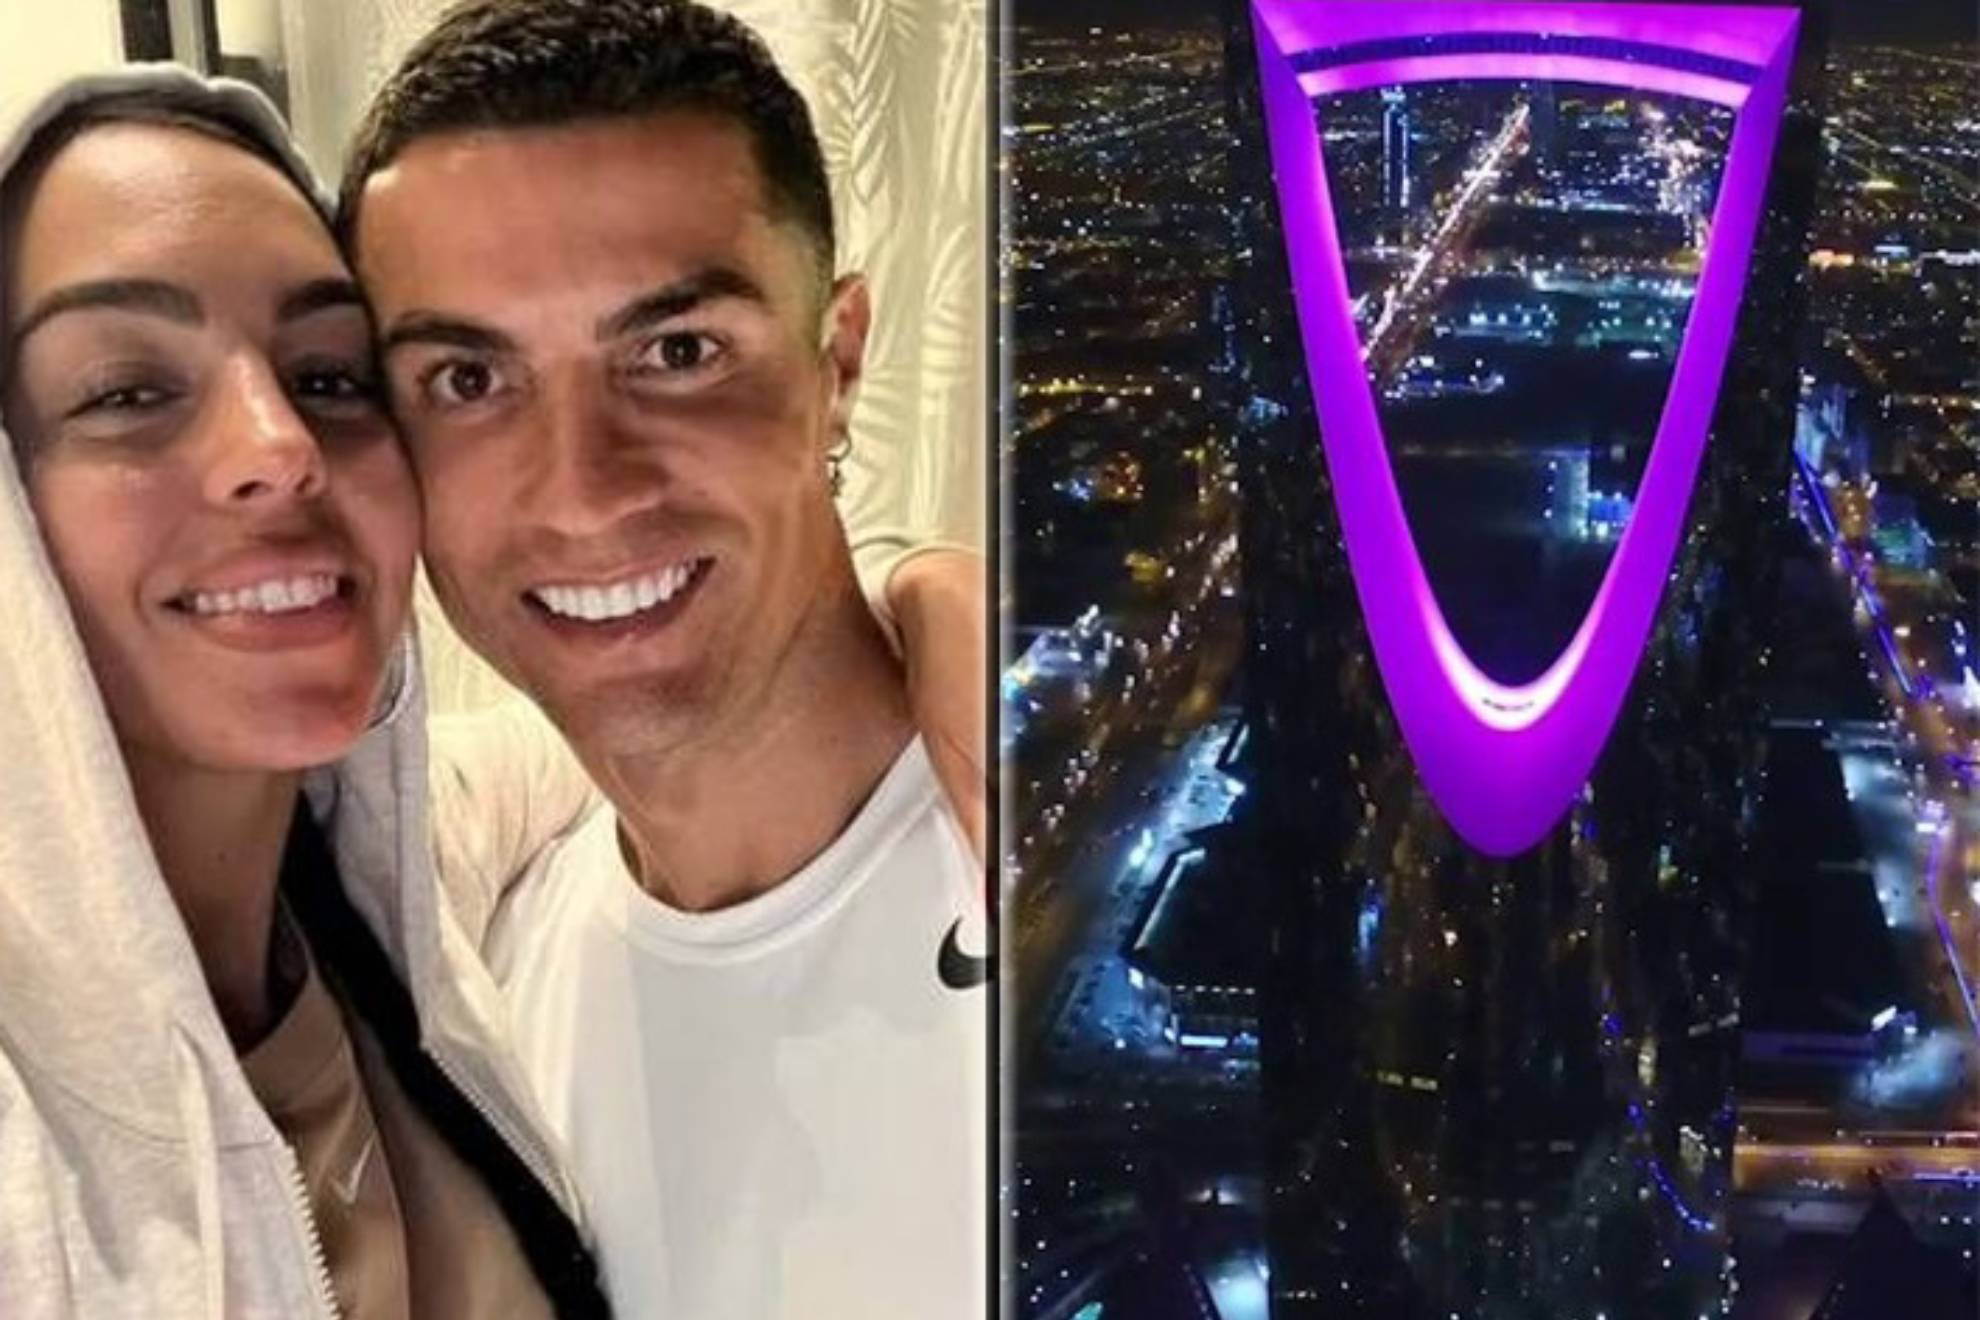 Hotel Four Seasons de Riyadh en la que se alojarn Cristiano Ronaldo y Georgia Rodrguez en Arabia Saud